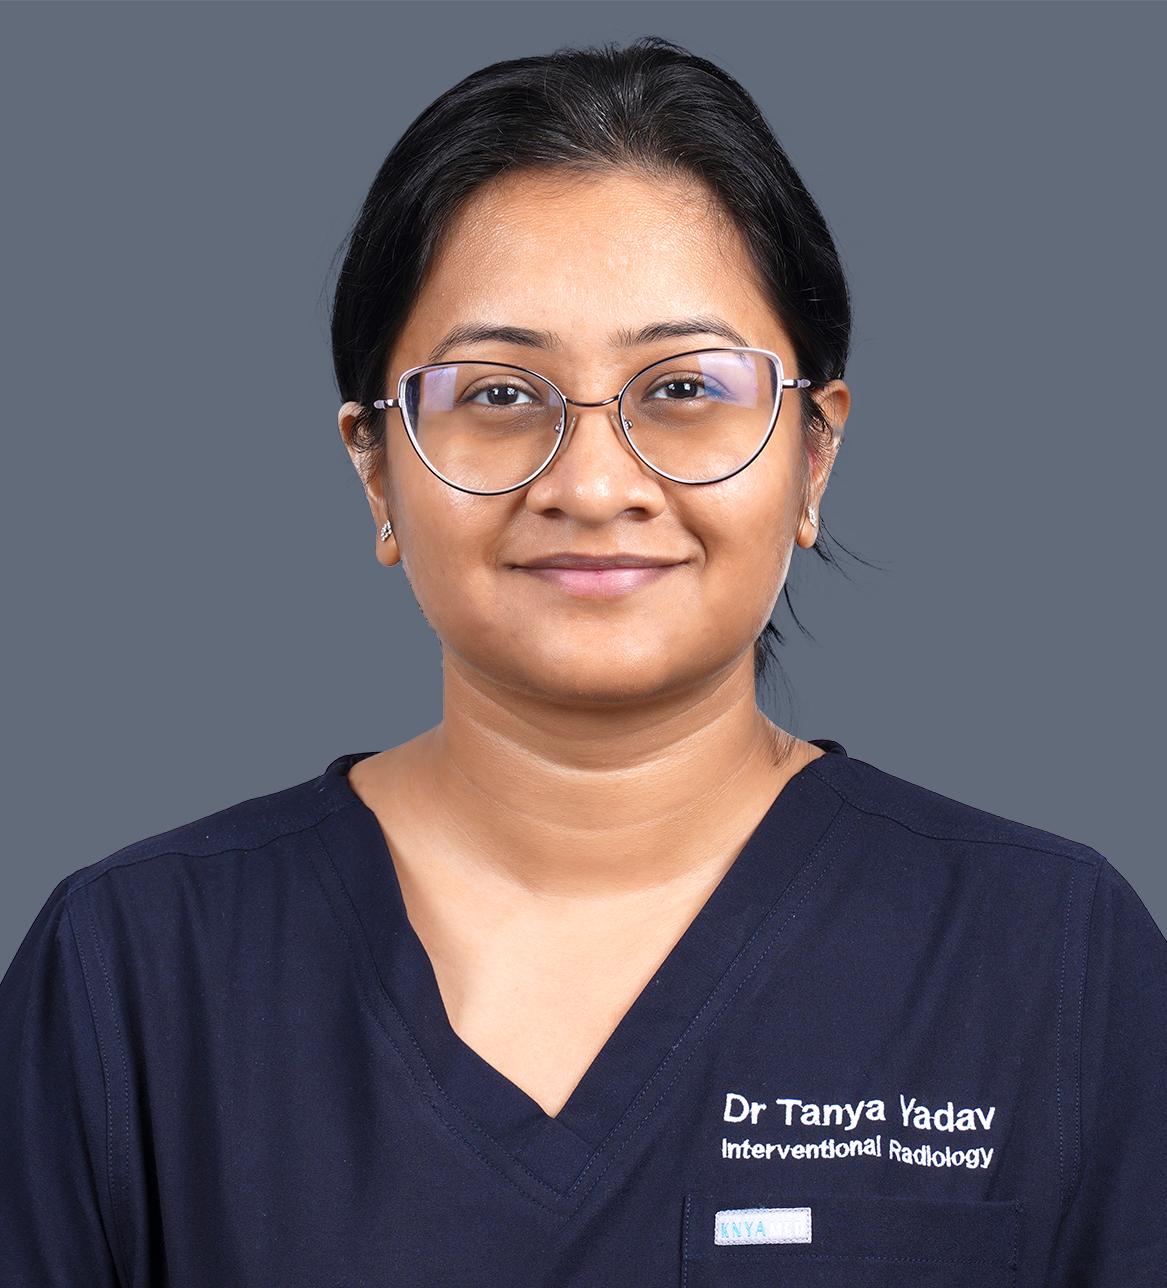 Dr.Tanya Yadav 